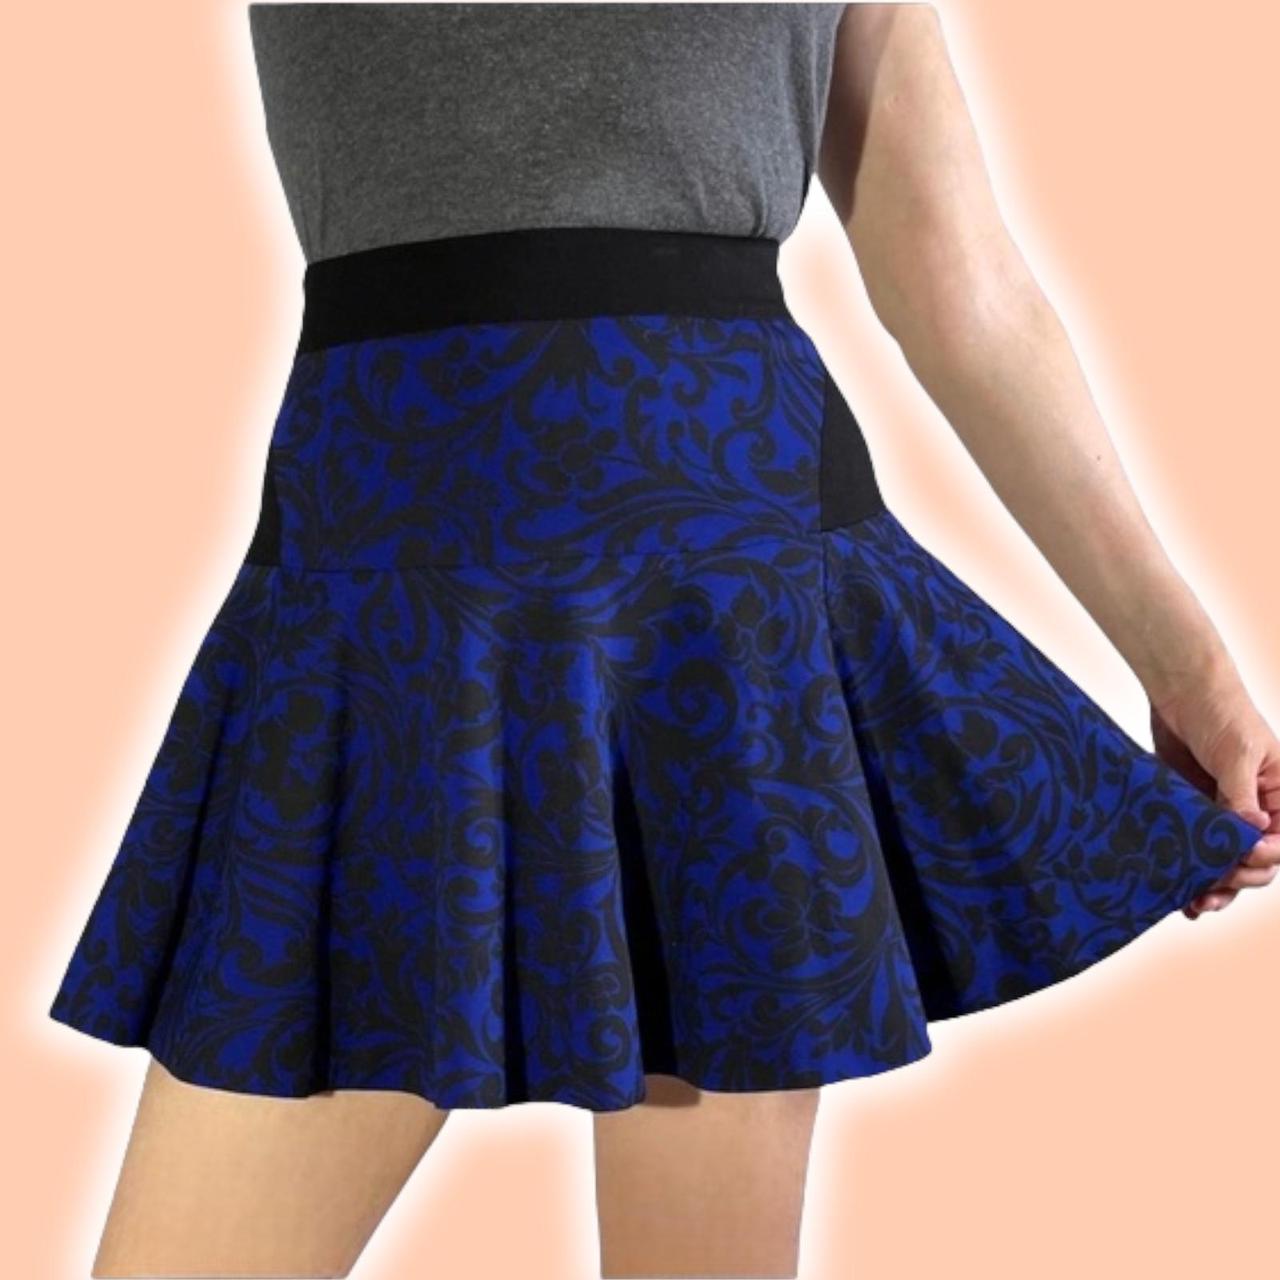 Karen Millen Women's Blue and Black Skirt